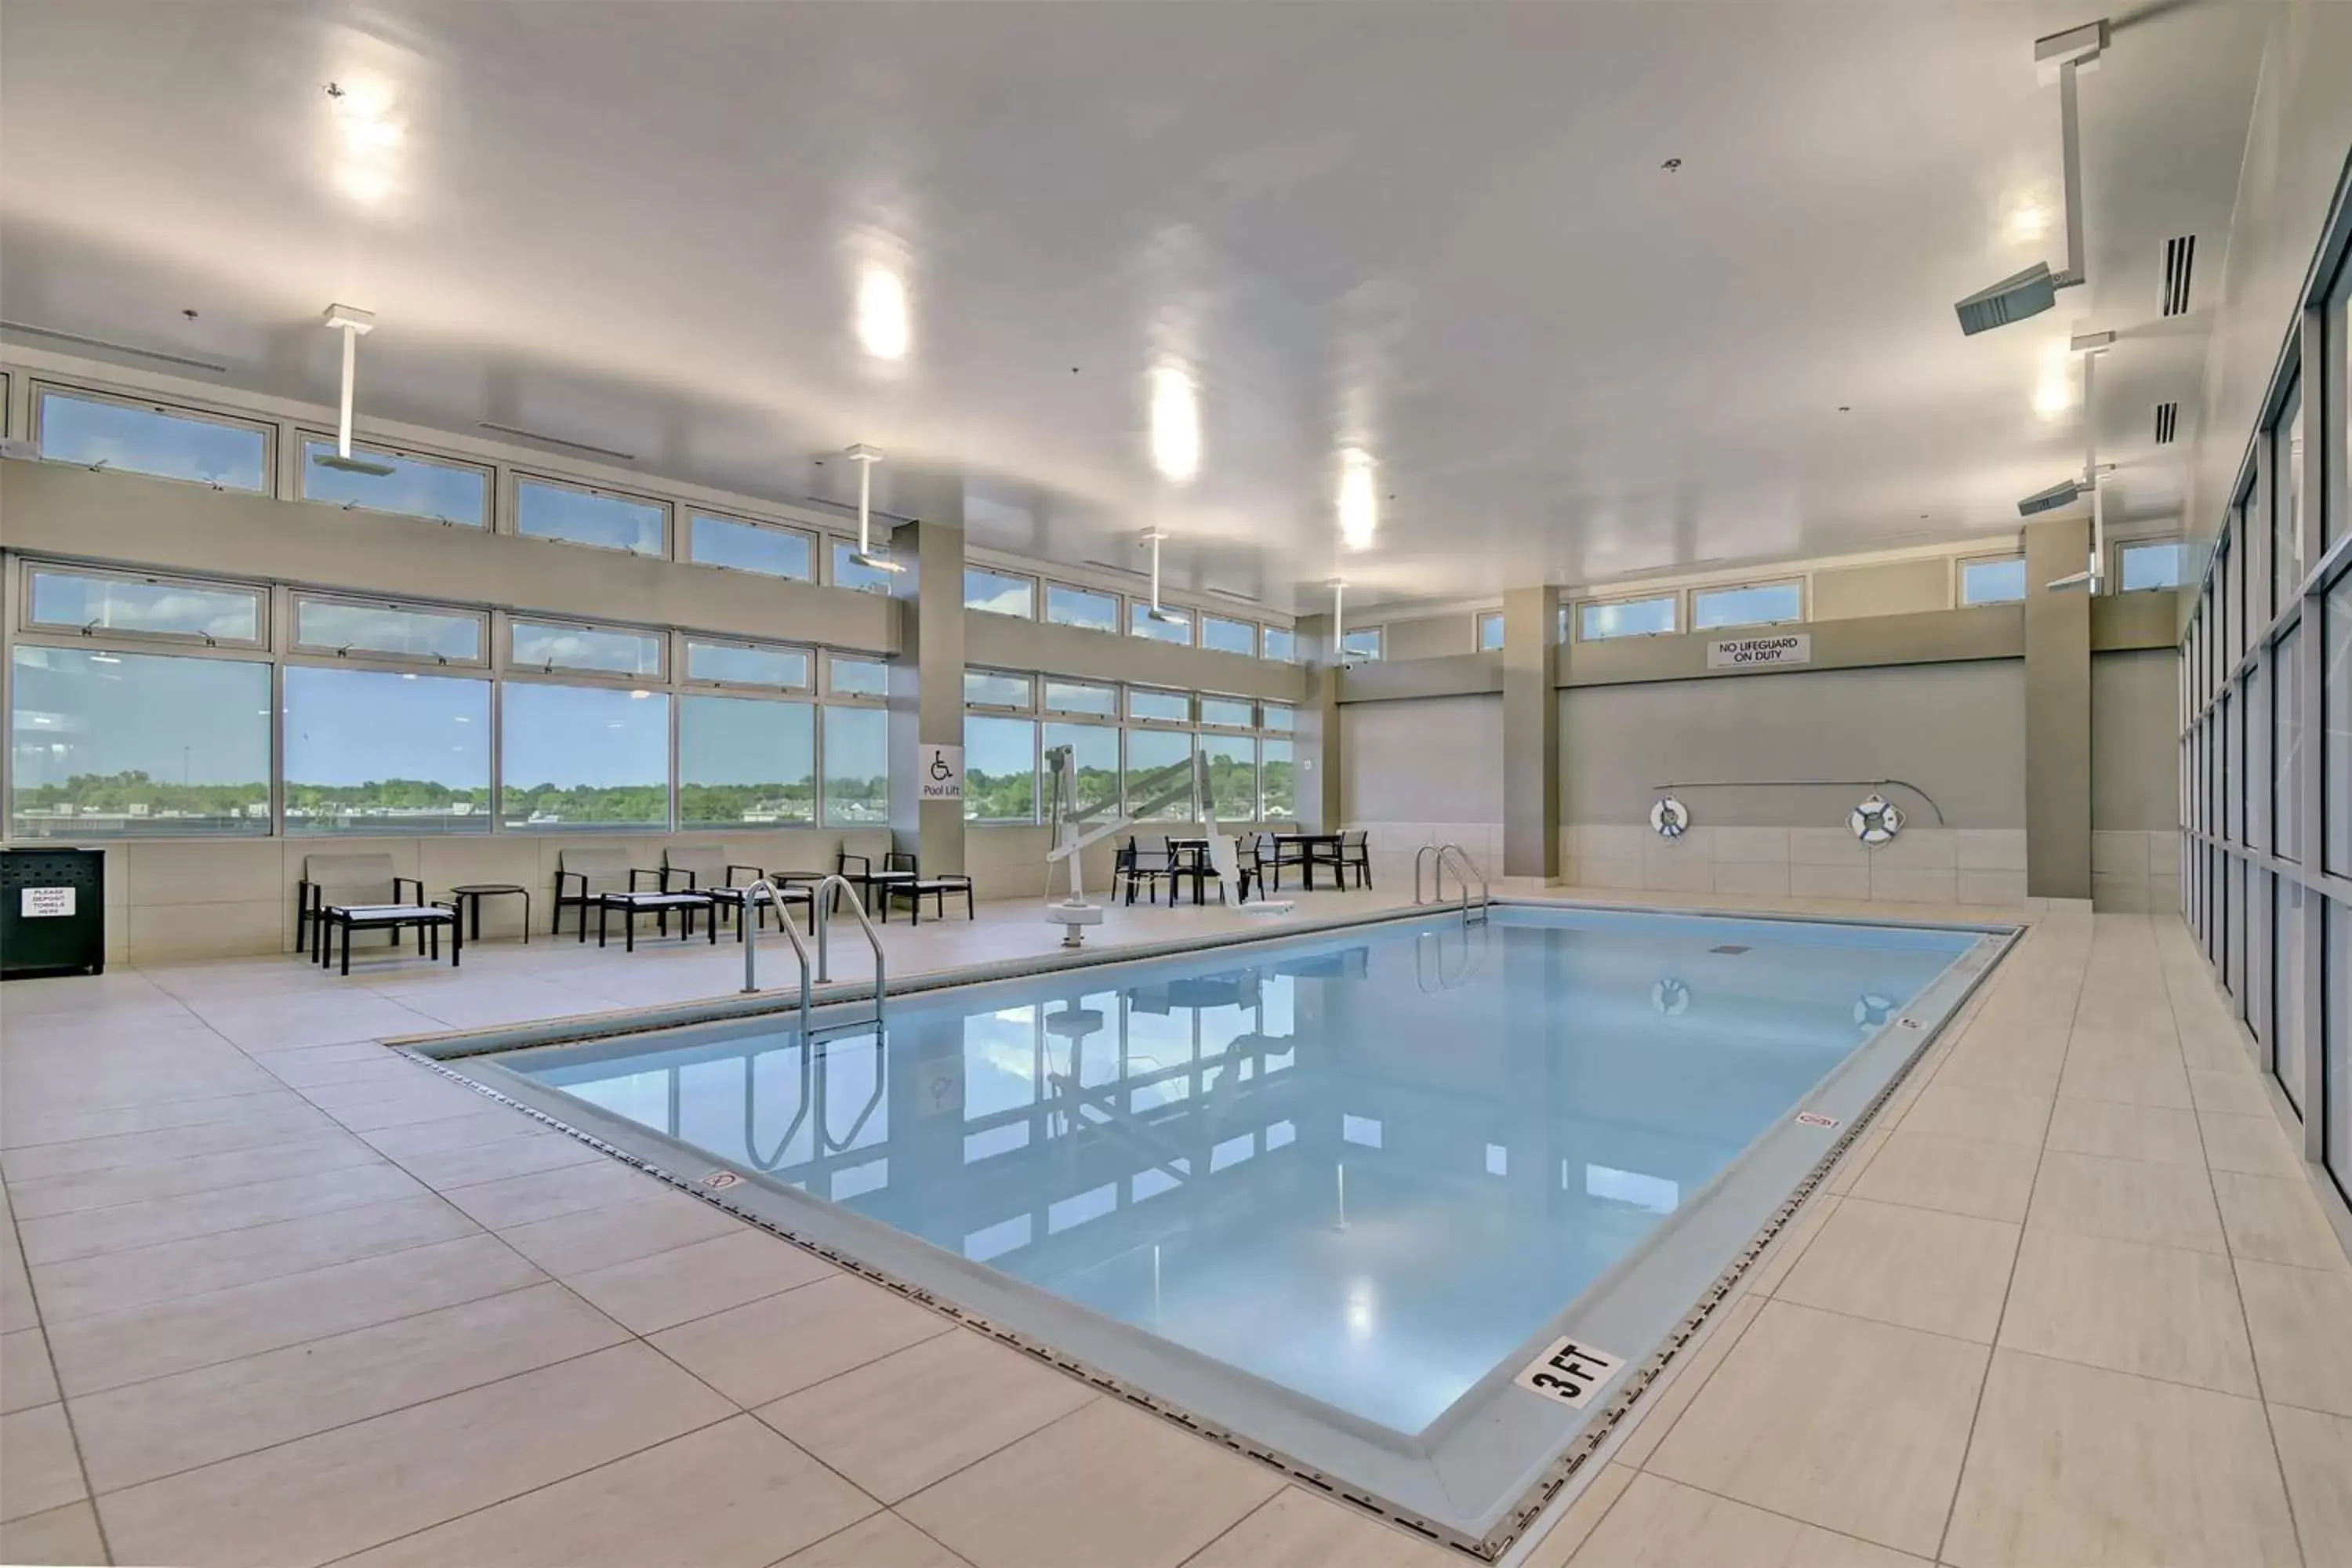 Swimming Pool in Tulsa Marriott Southern Hills